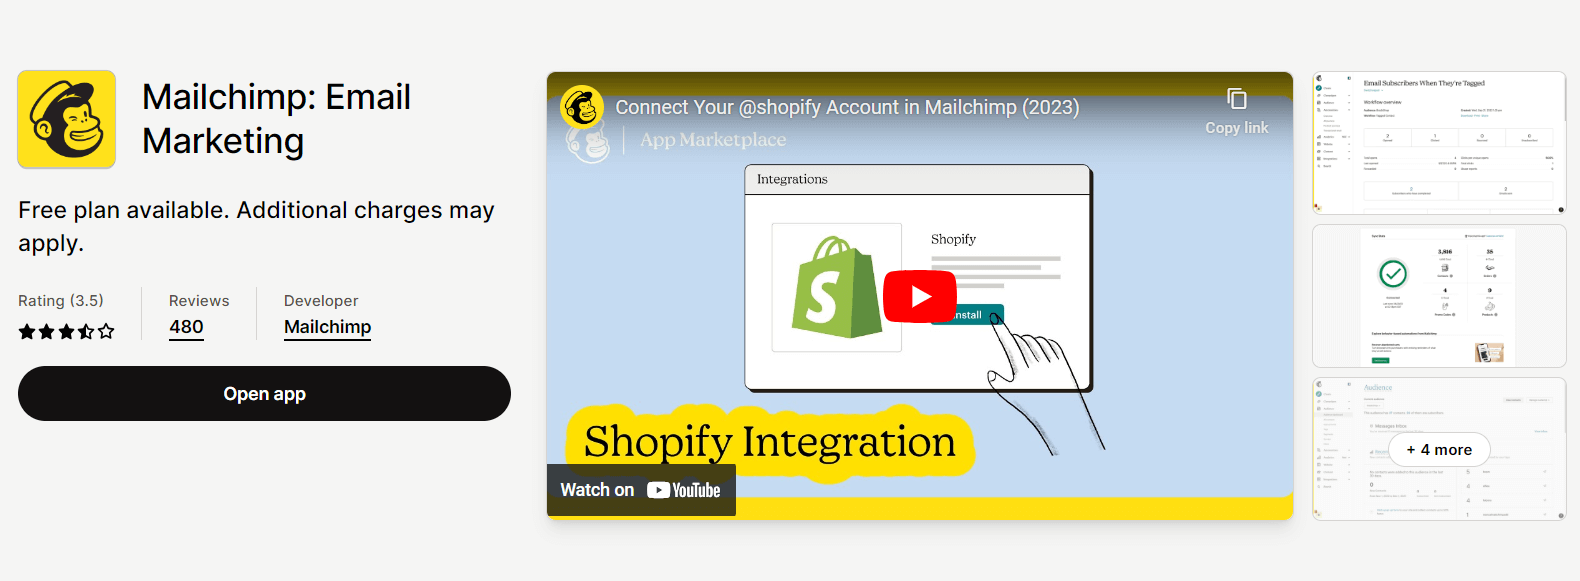 Best marketing apps for Shopify - Mailchimp